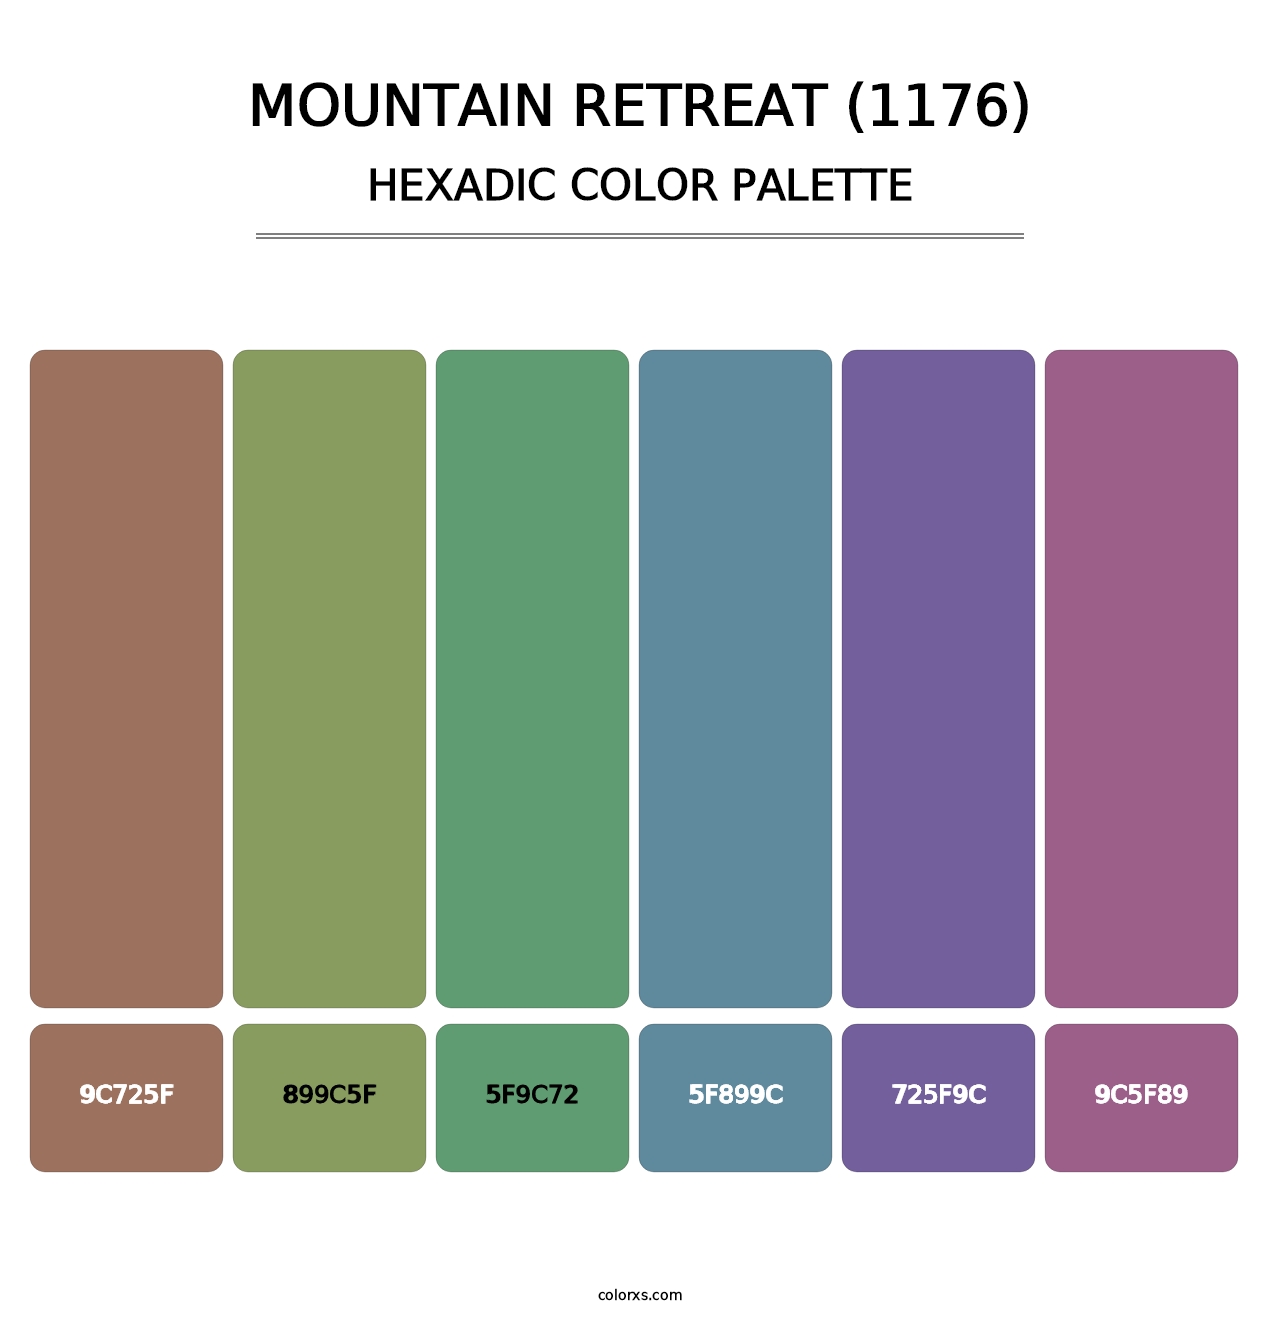 Mountain Retreat (1176) - Hexadic Color Palette